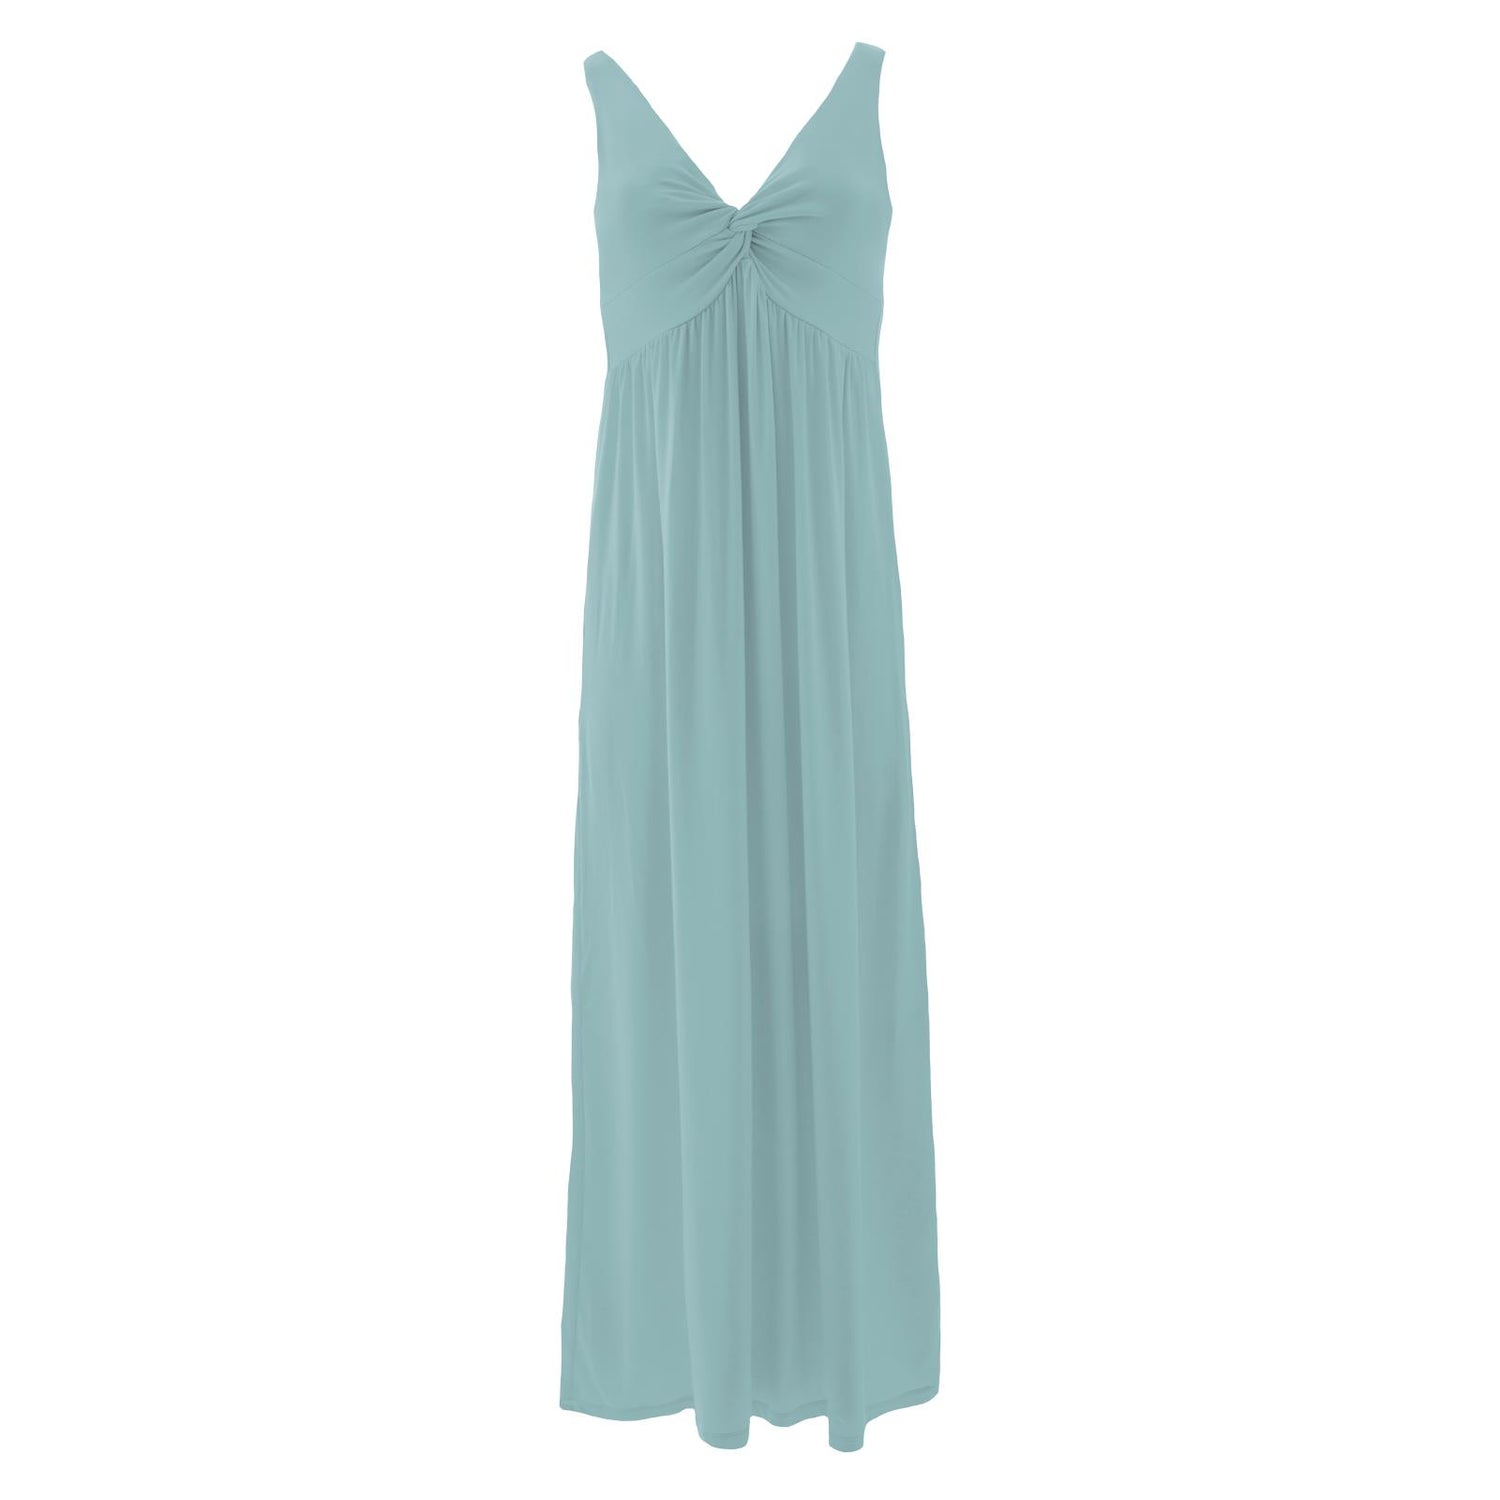 Women's Solid Simple Twist Nightgown in Jade